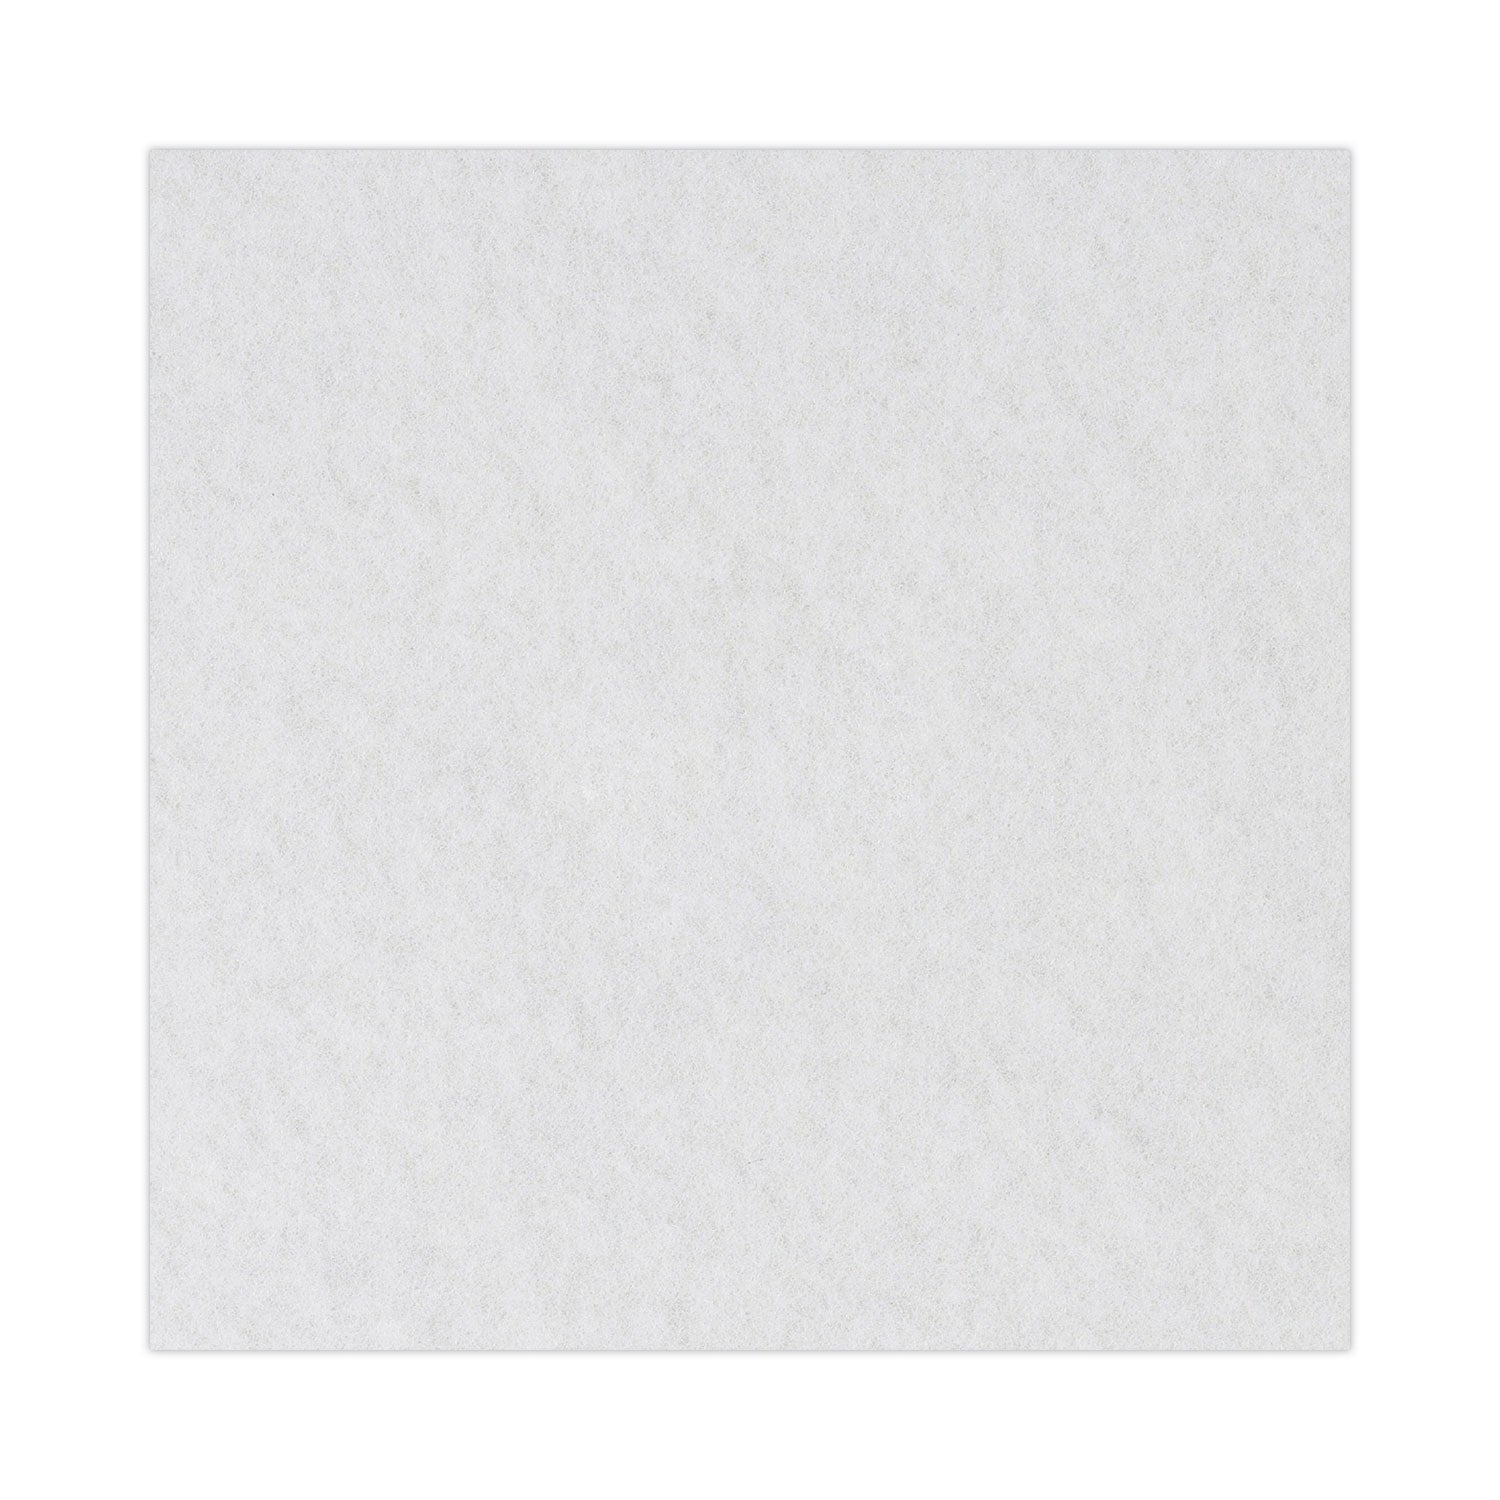 polishing-floor-pads-16-diameter-white-5-carton_bwk4016whi - 6